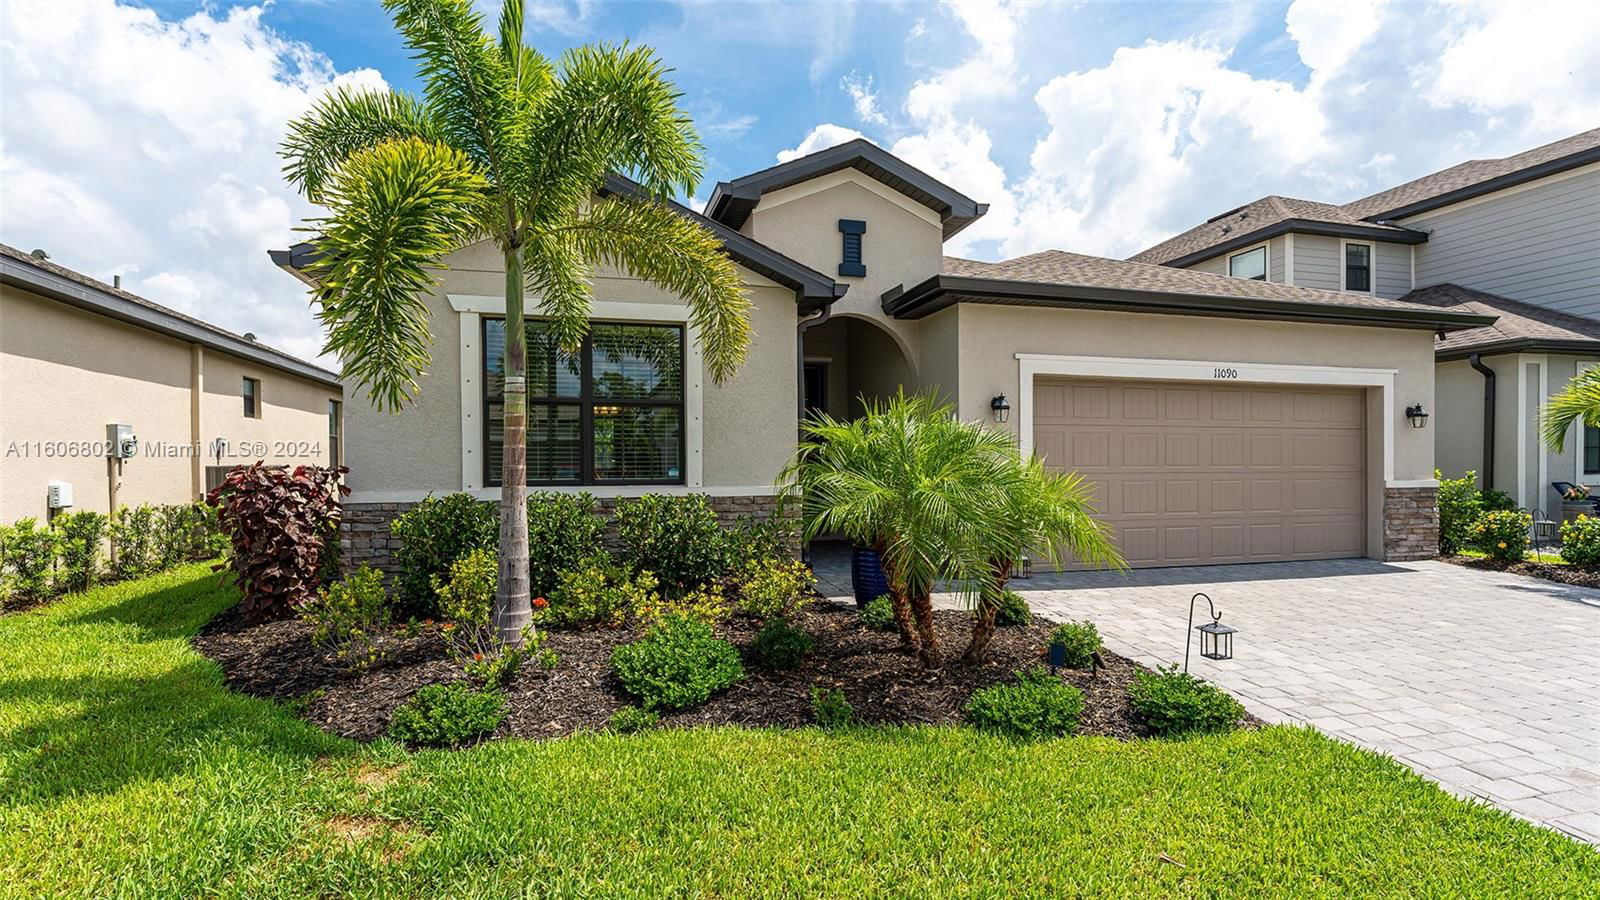 Real estate property located at 11090 Balfour Street, Sarasota County, Tortuga, Venice, FL